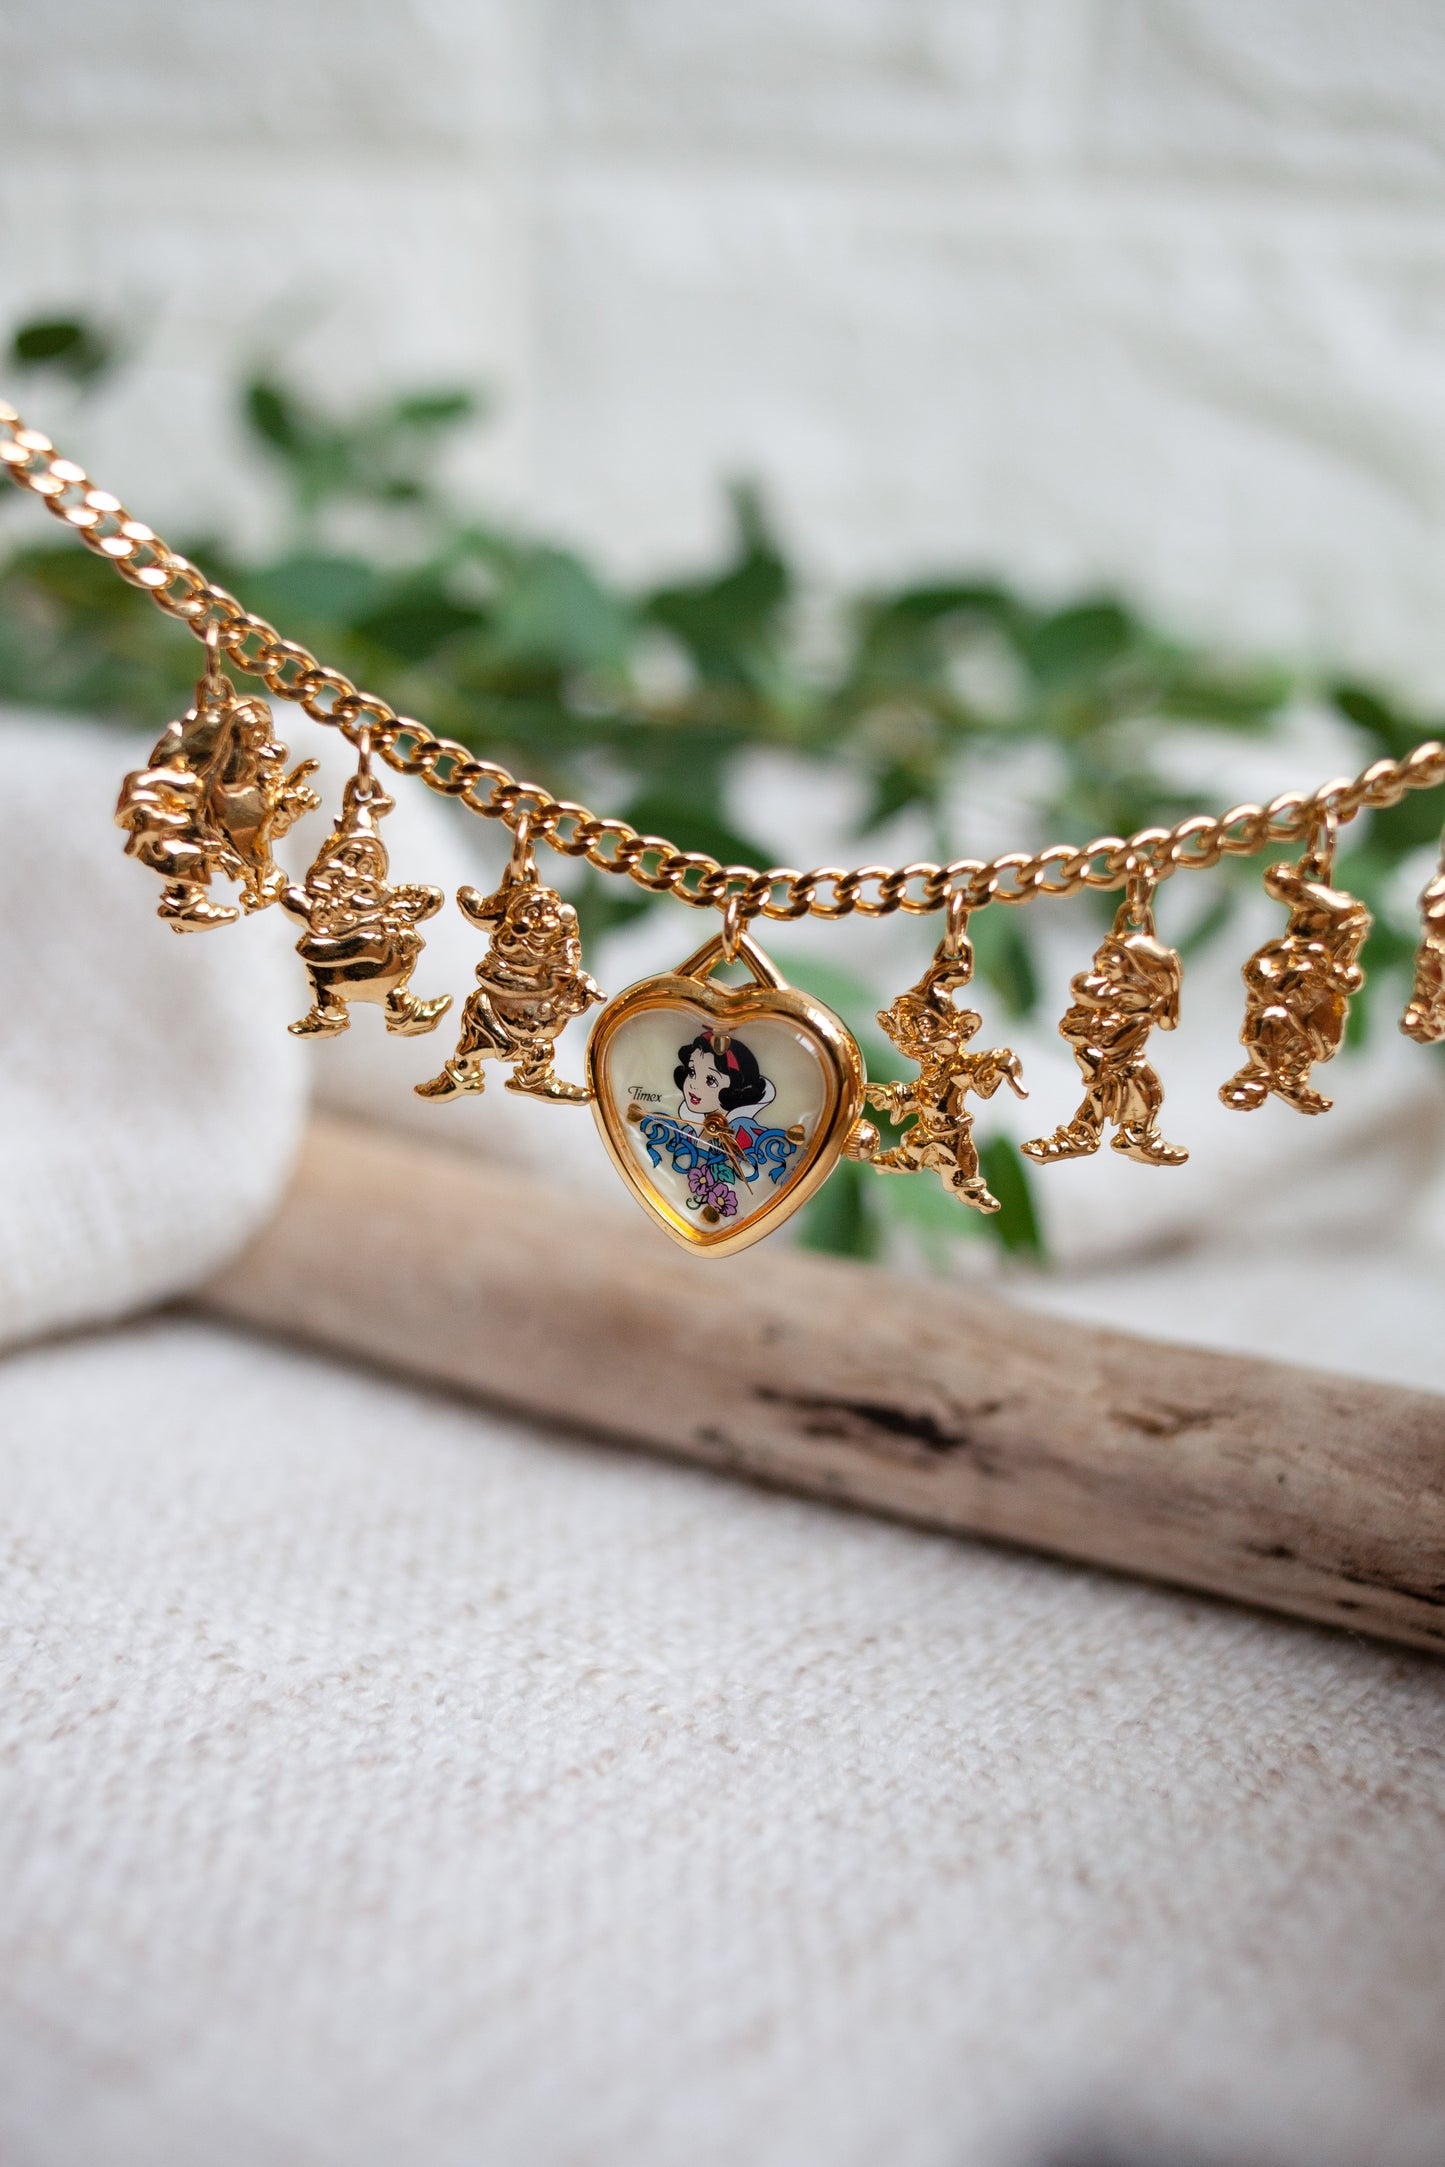 True Vintage: Snow White Charm Bracelet